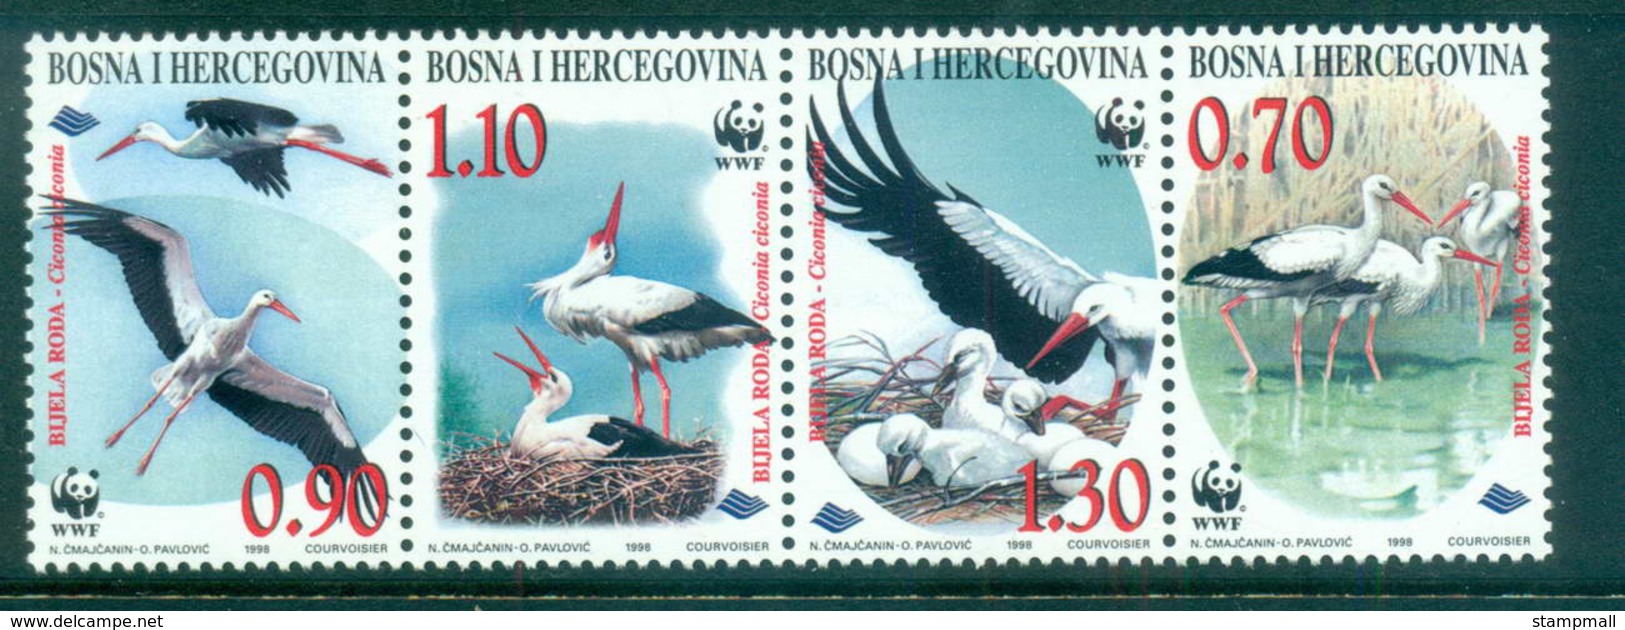 Bosnia & Herzegovina 1998 WWF White Stork Str 4 MUH Lot64014 - Bosnia And Herzegovina